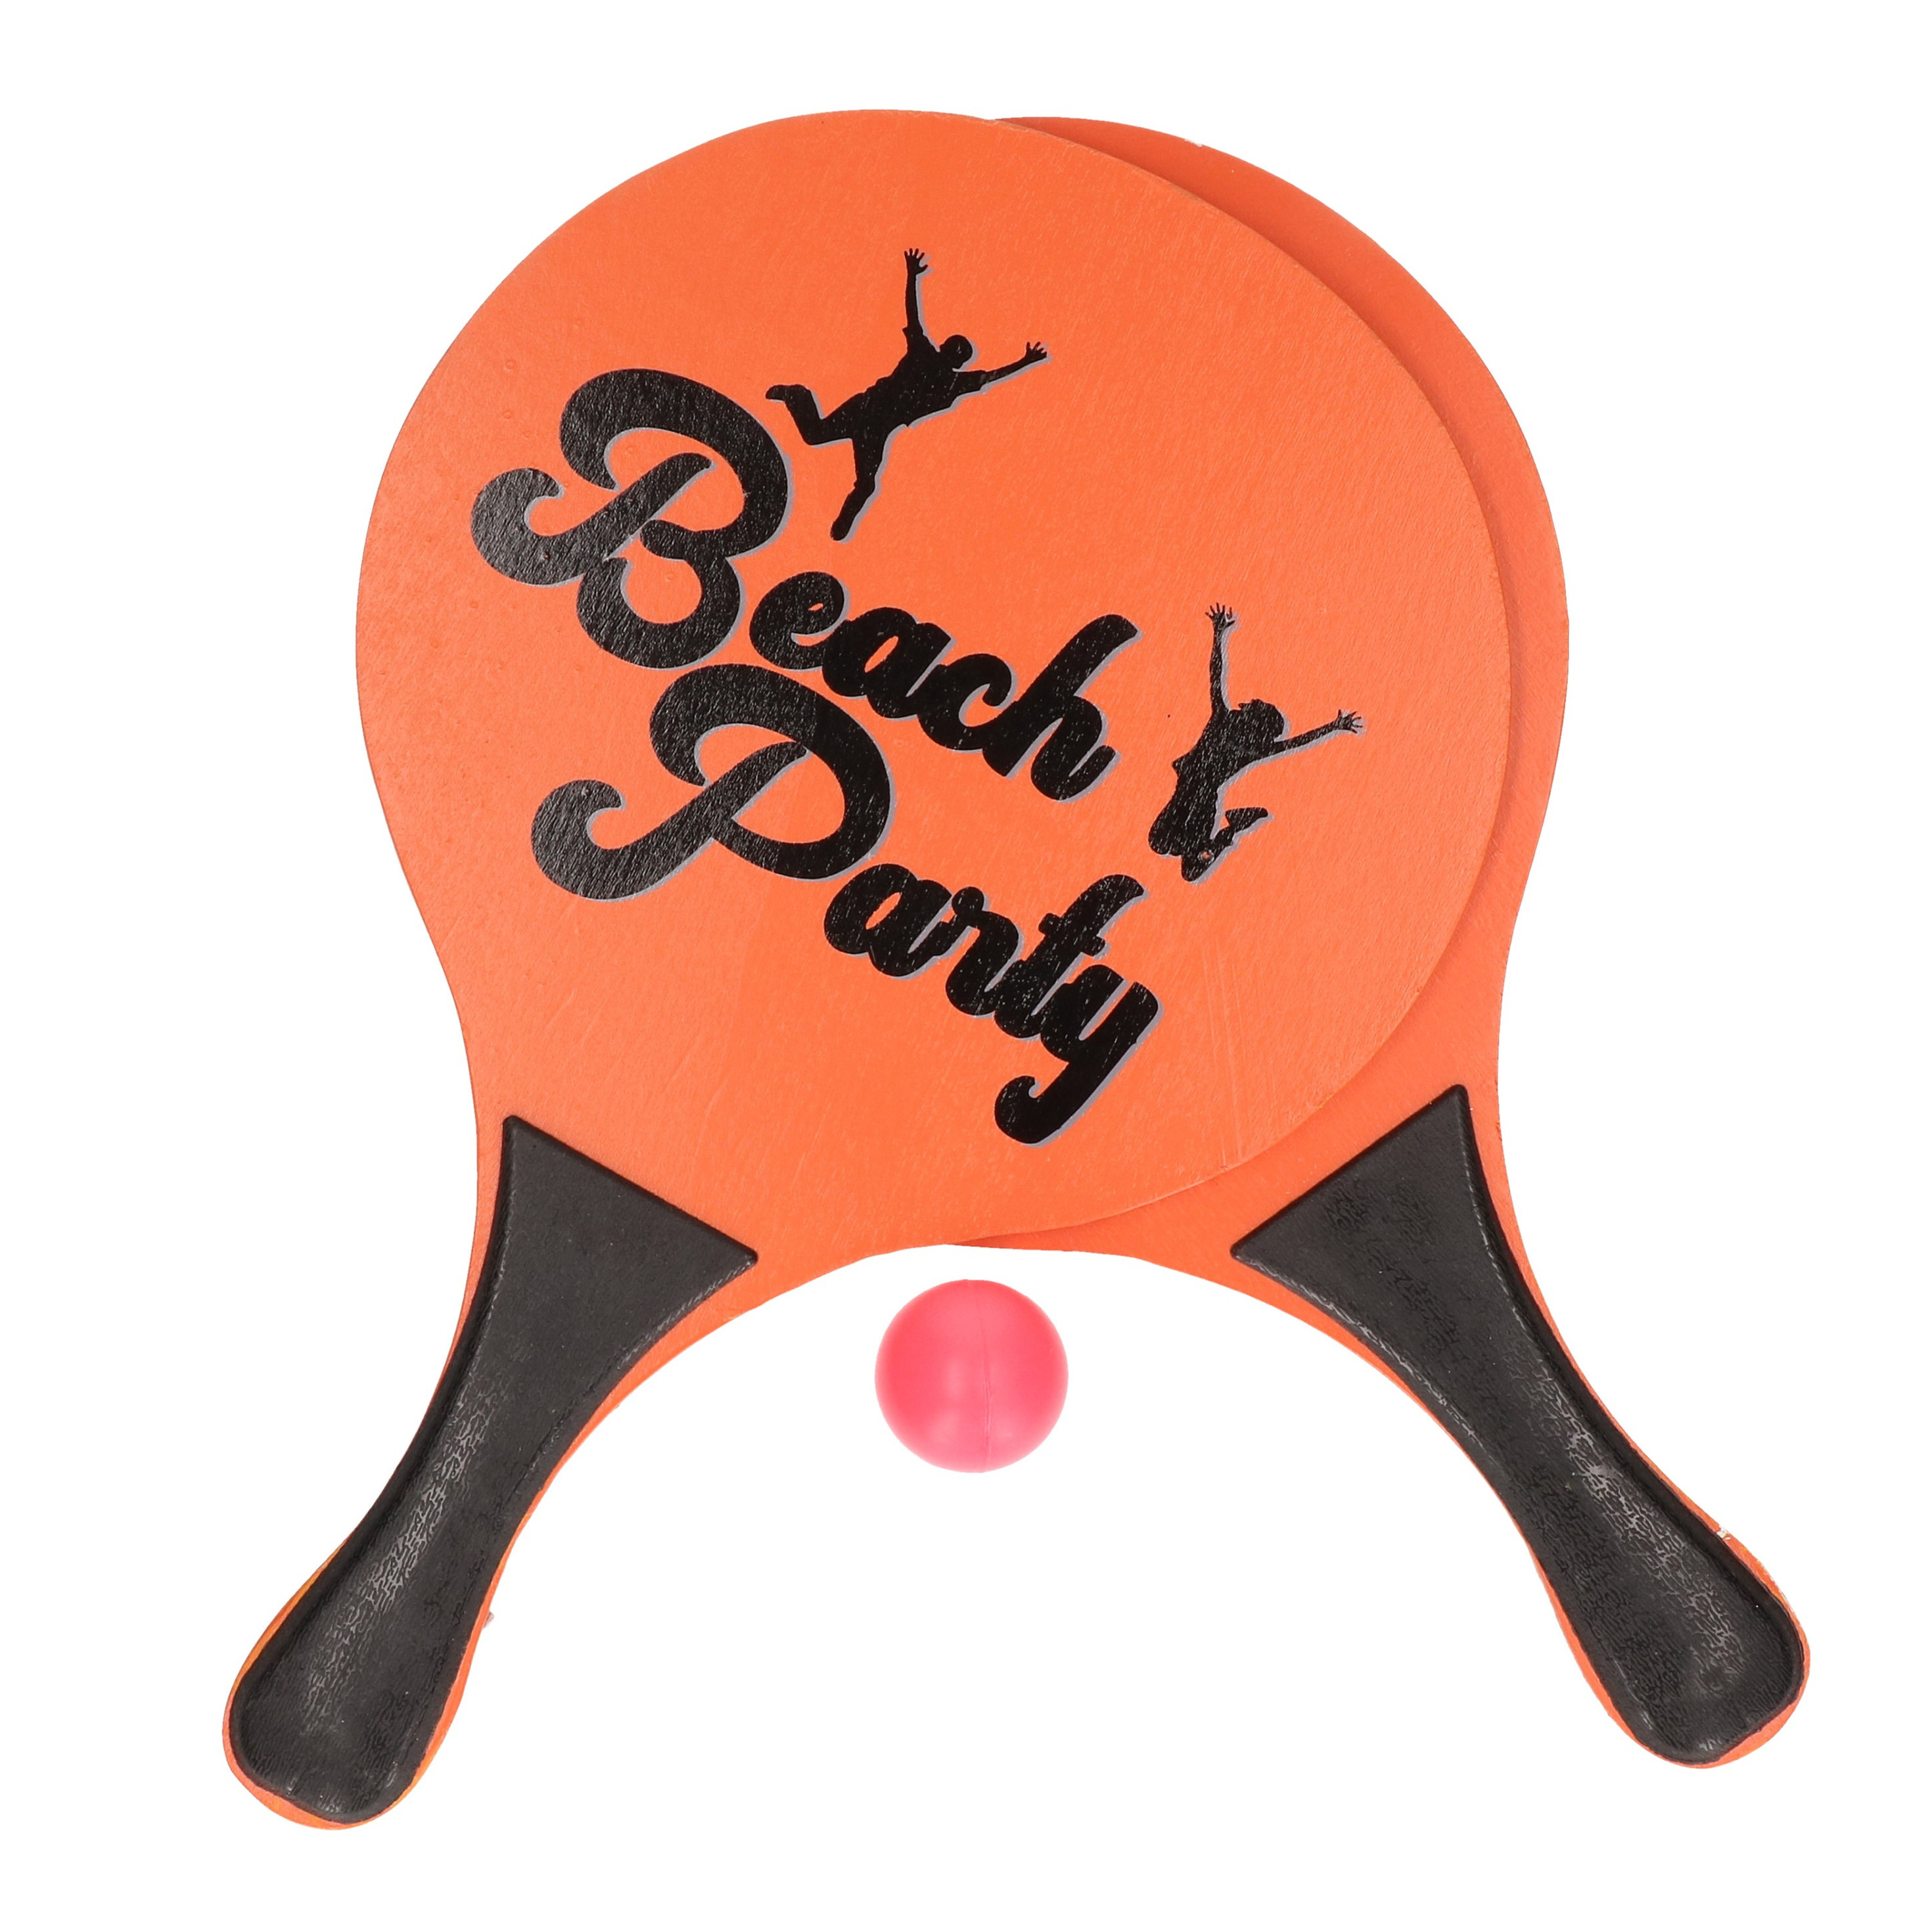 Actief speelgoed tennis-beachball setje oranje